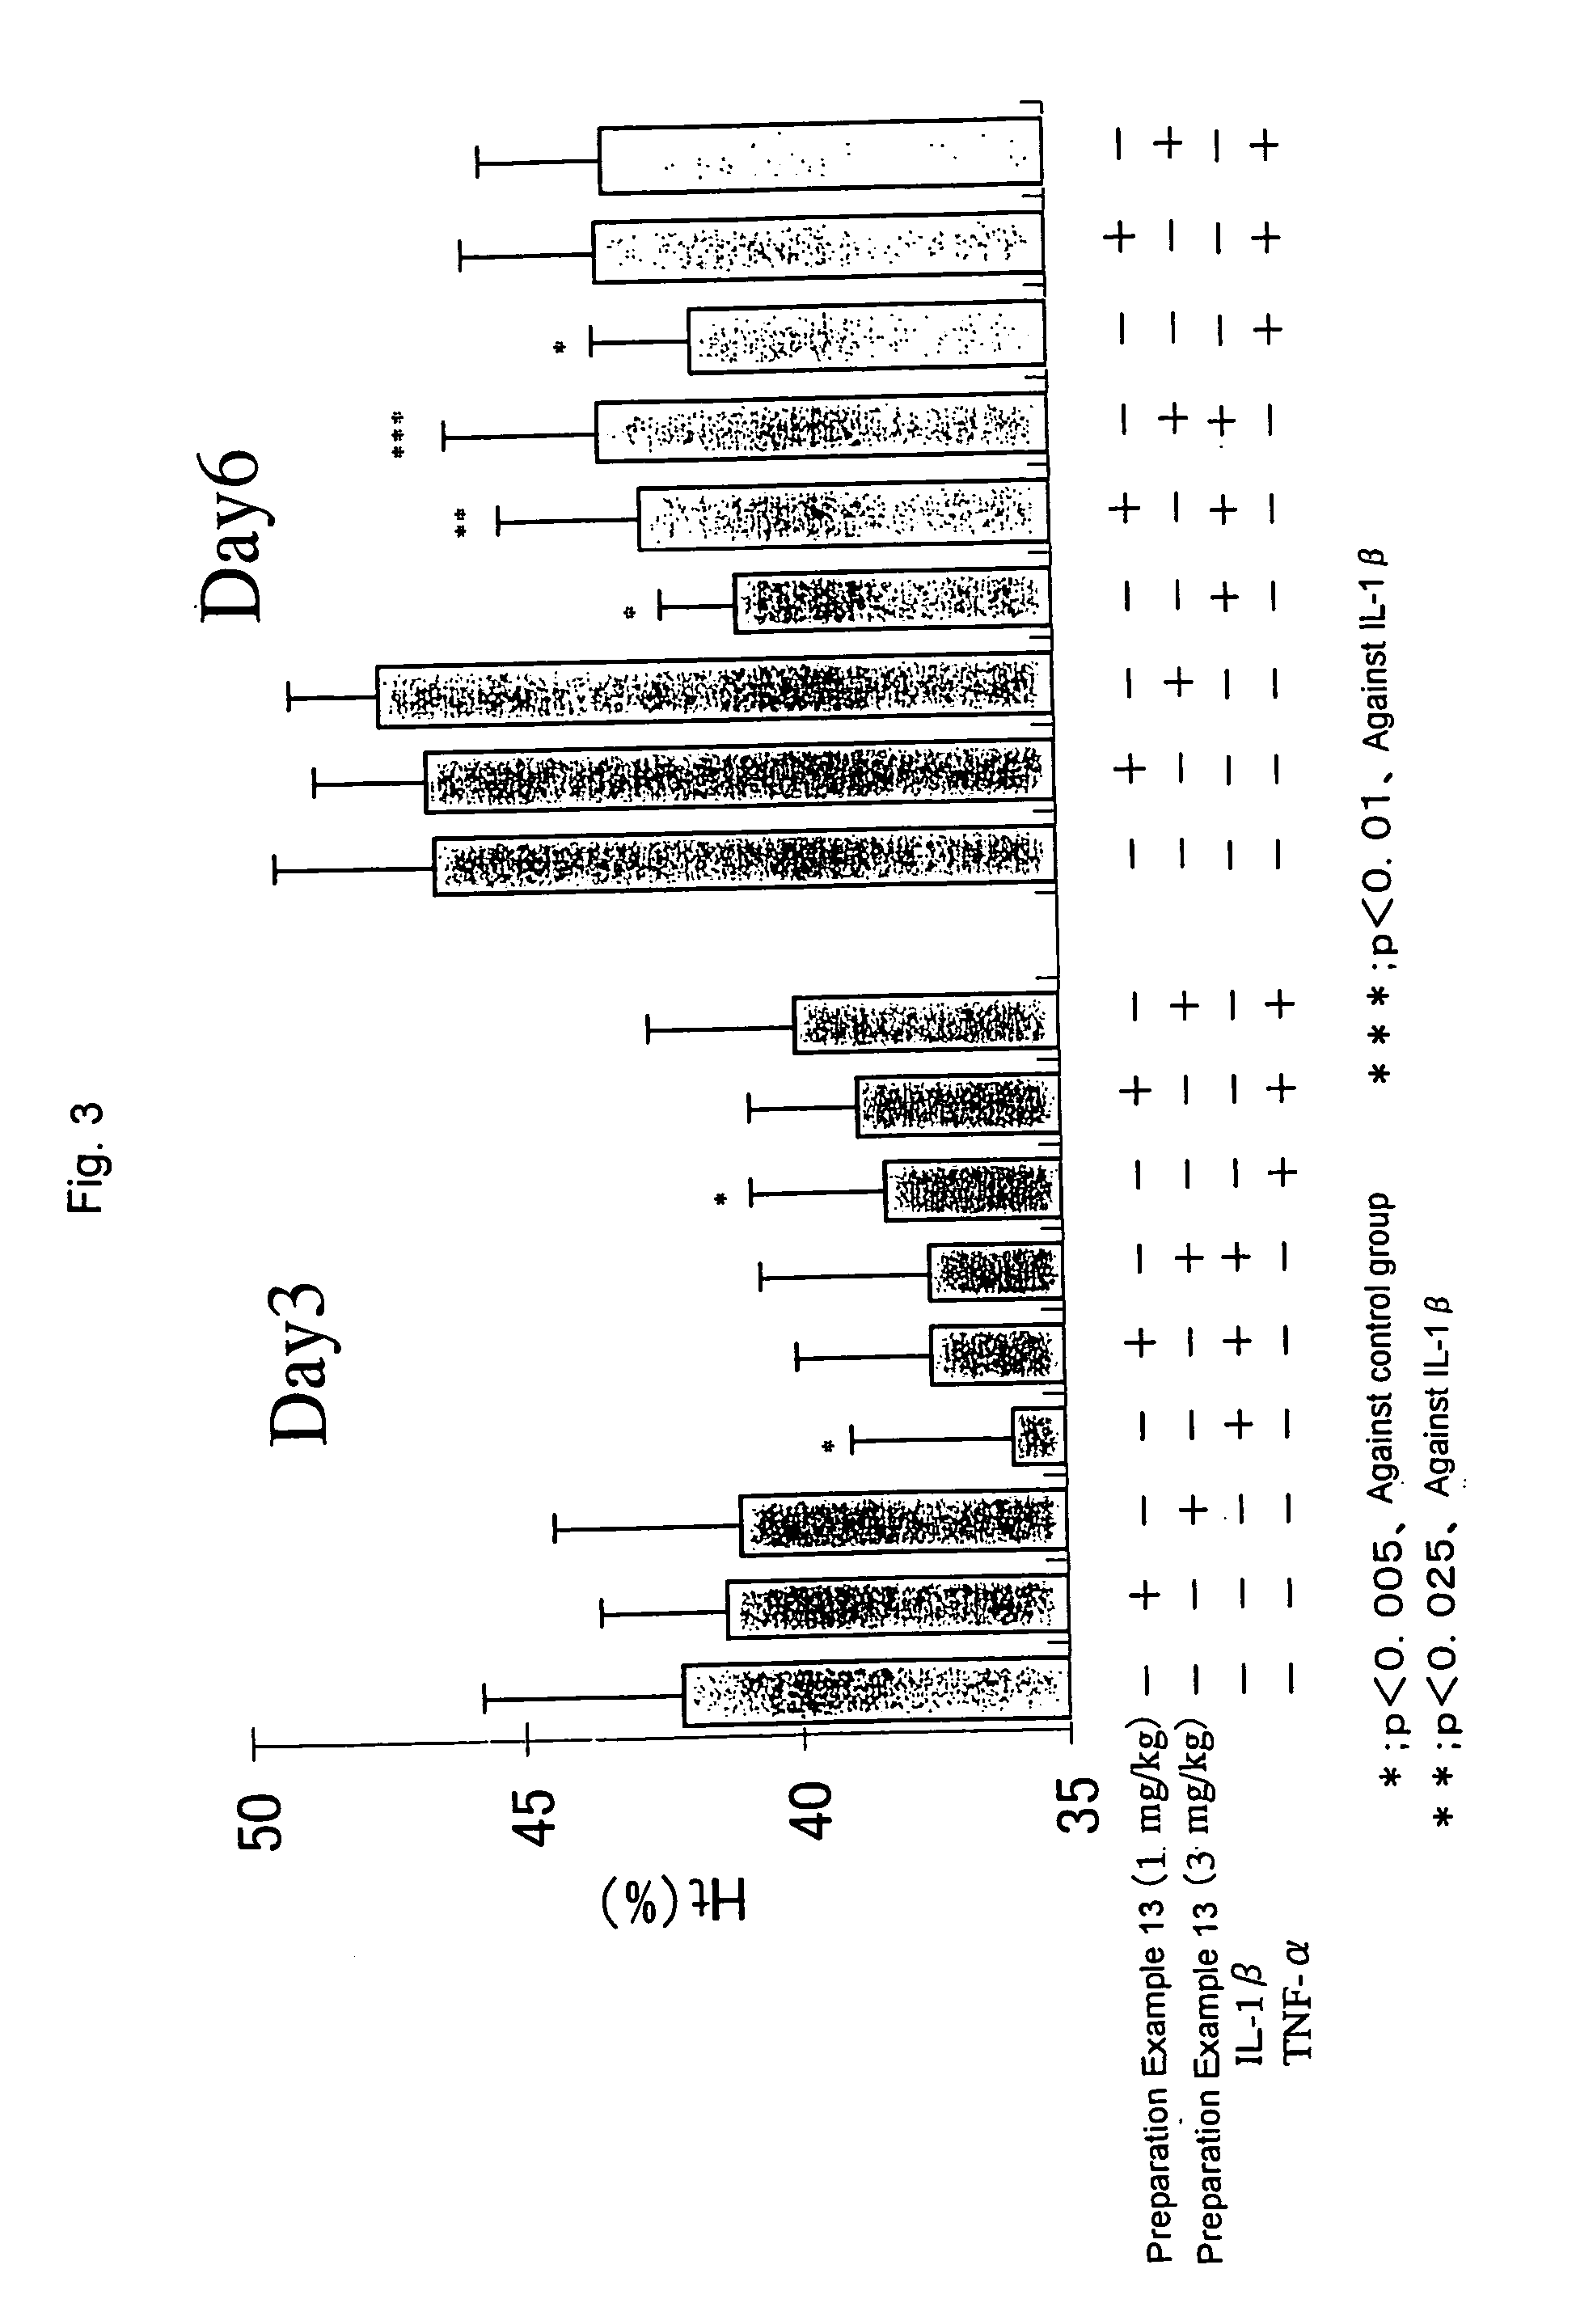 Erythropoietin production accelerator